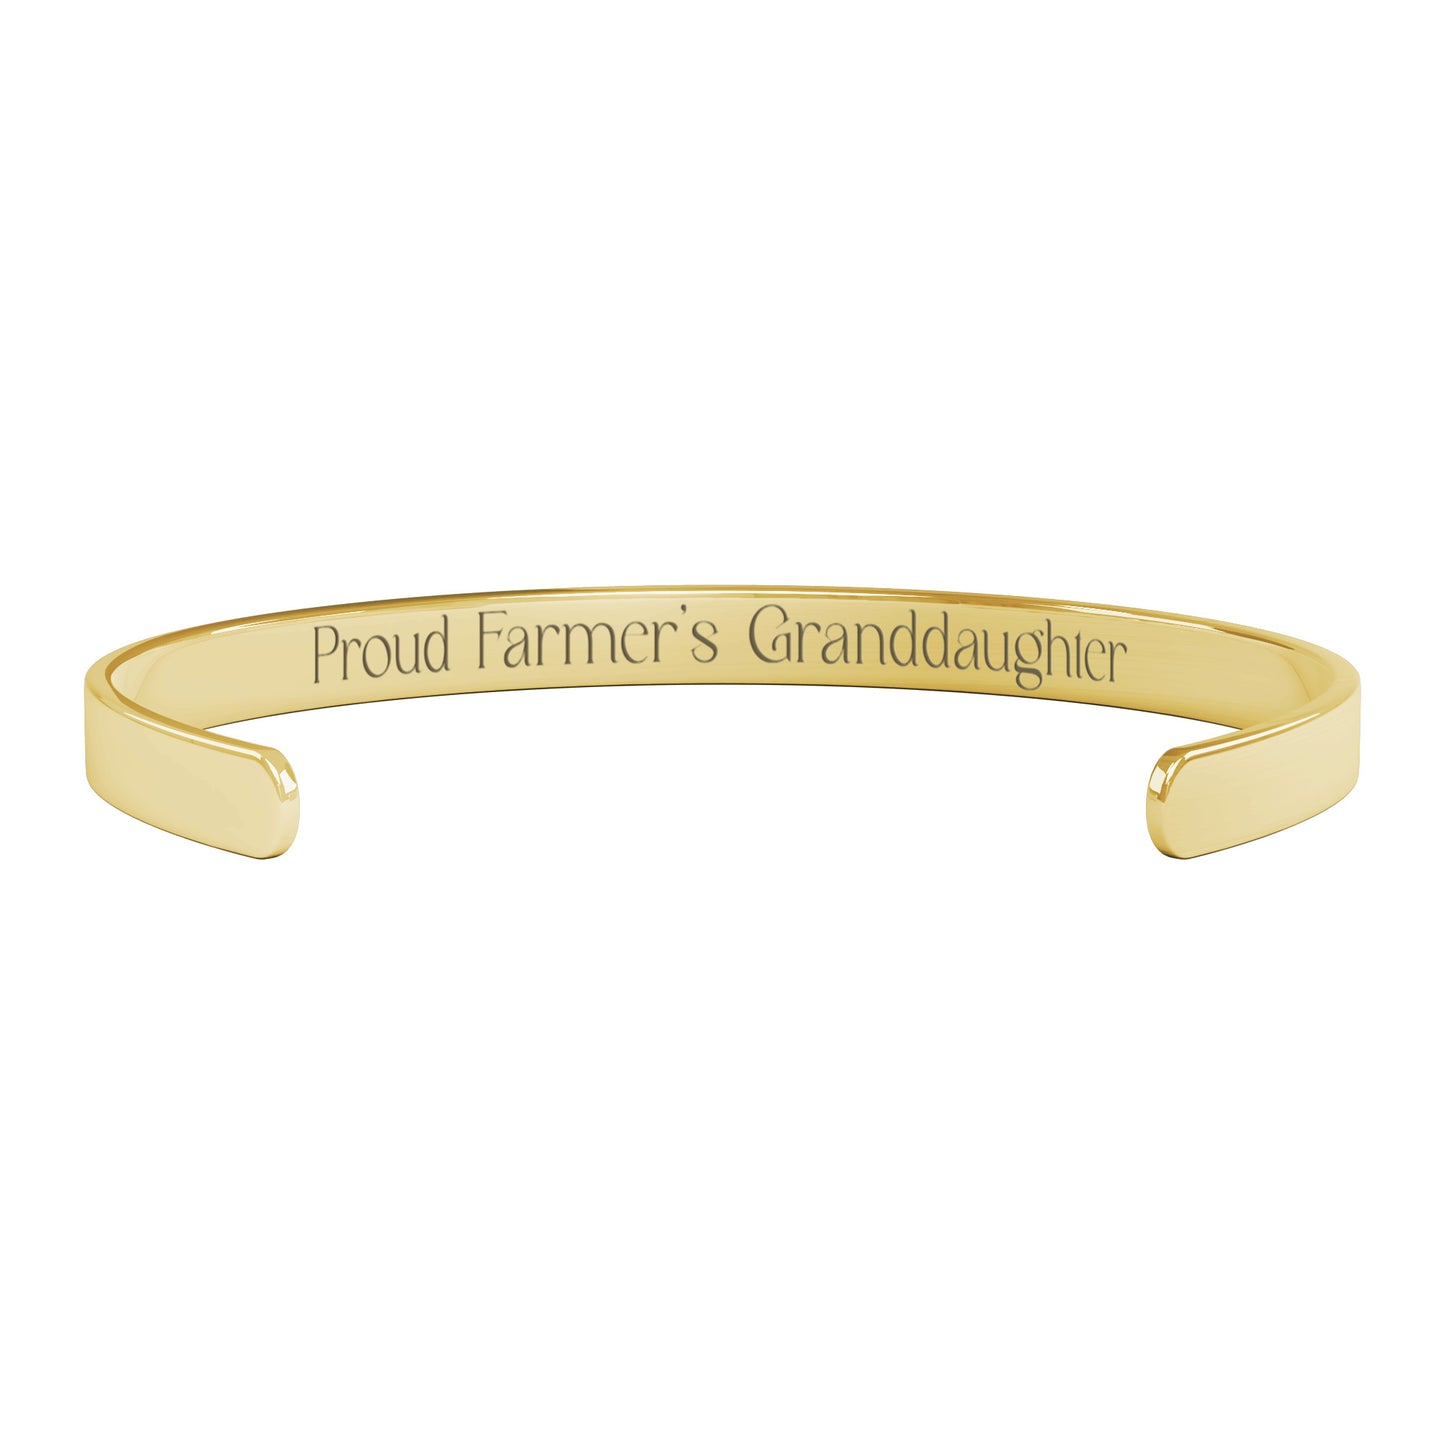 Proud Farmer's Granddaughter Cuff Bracelet - FREE SHIPPING